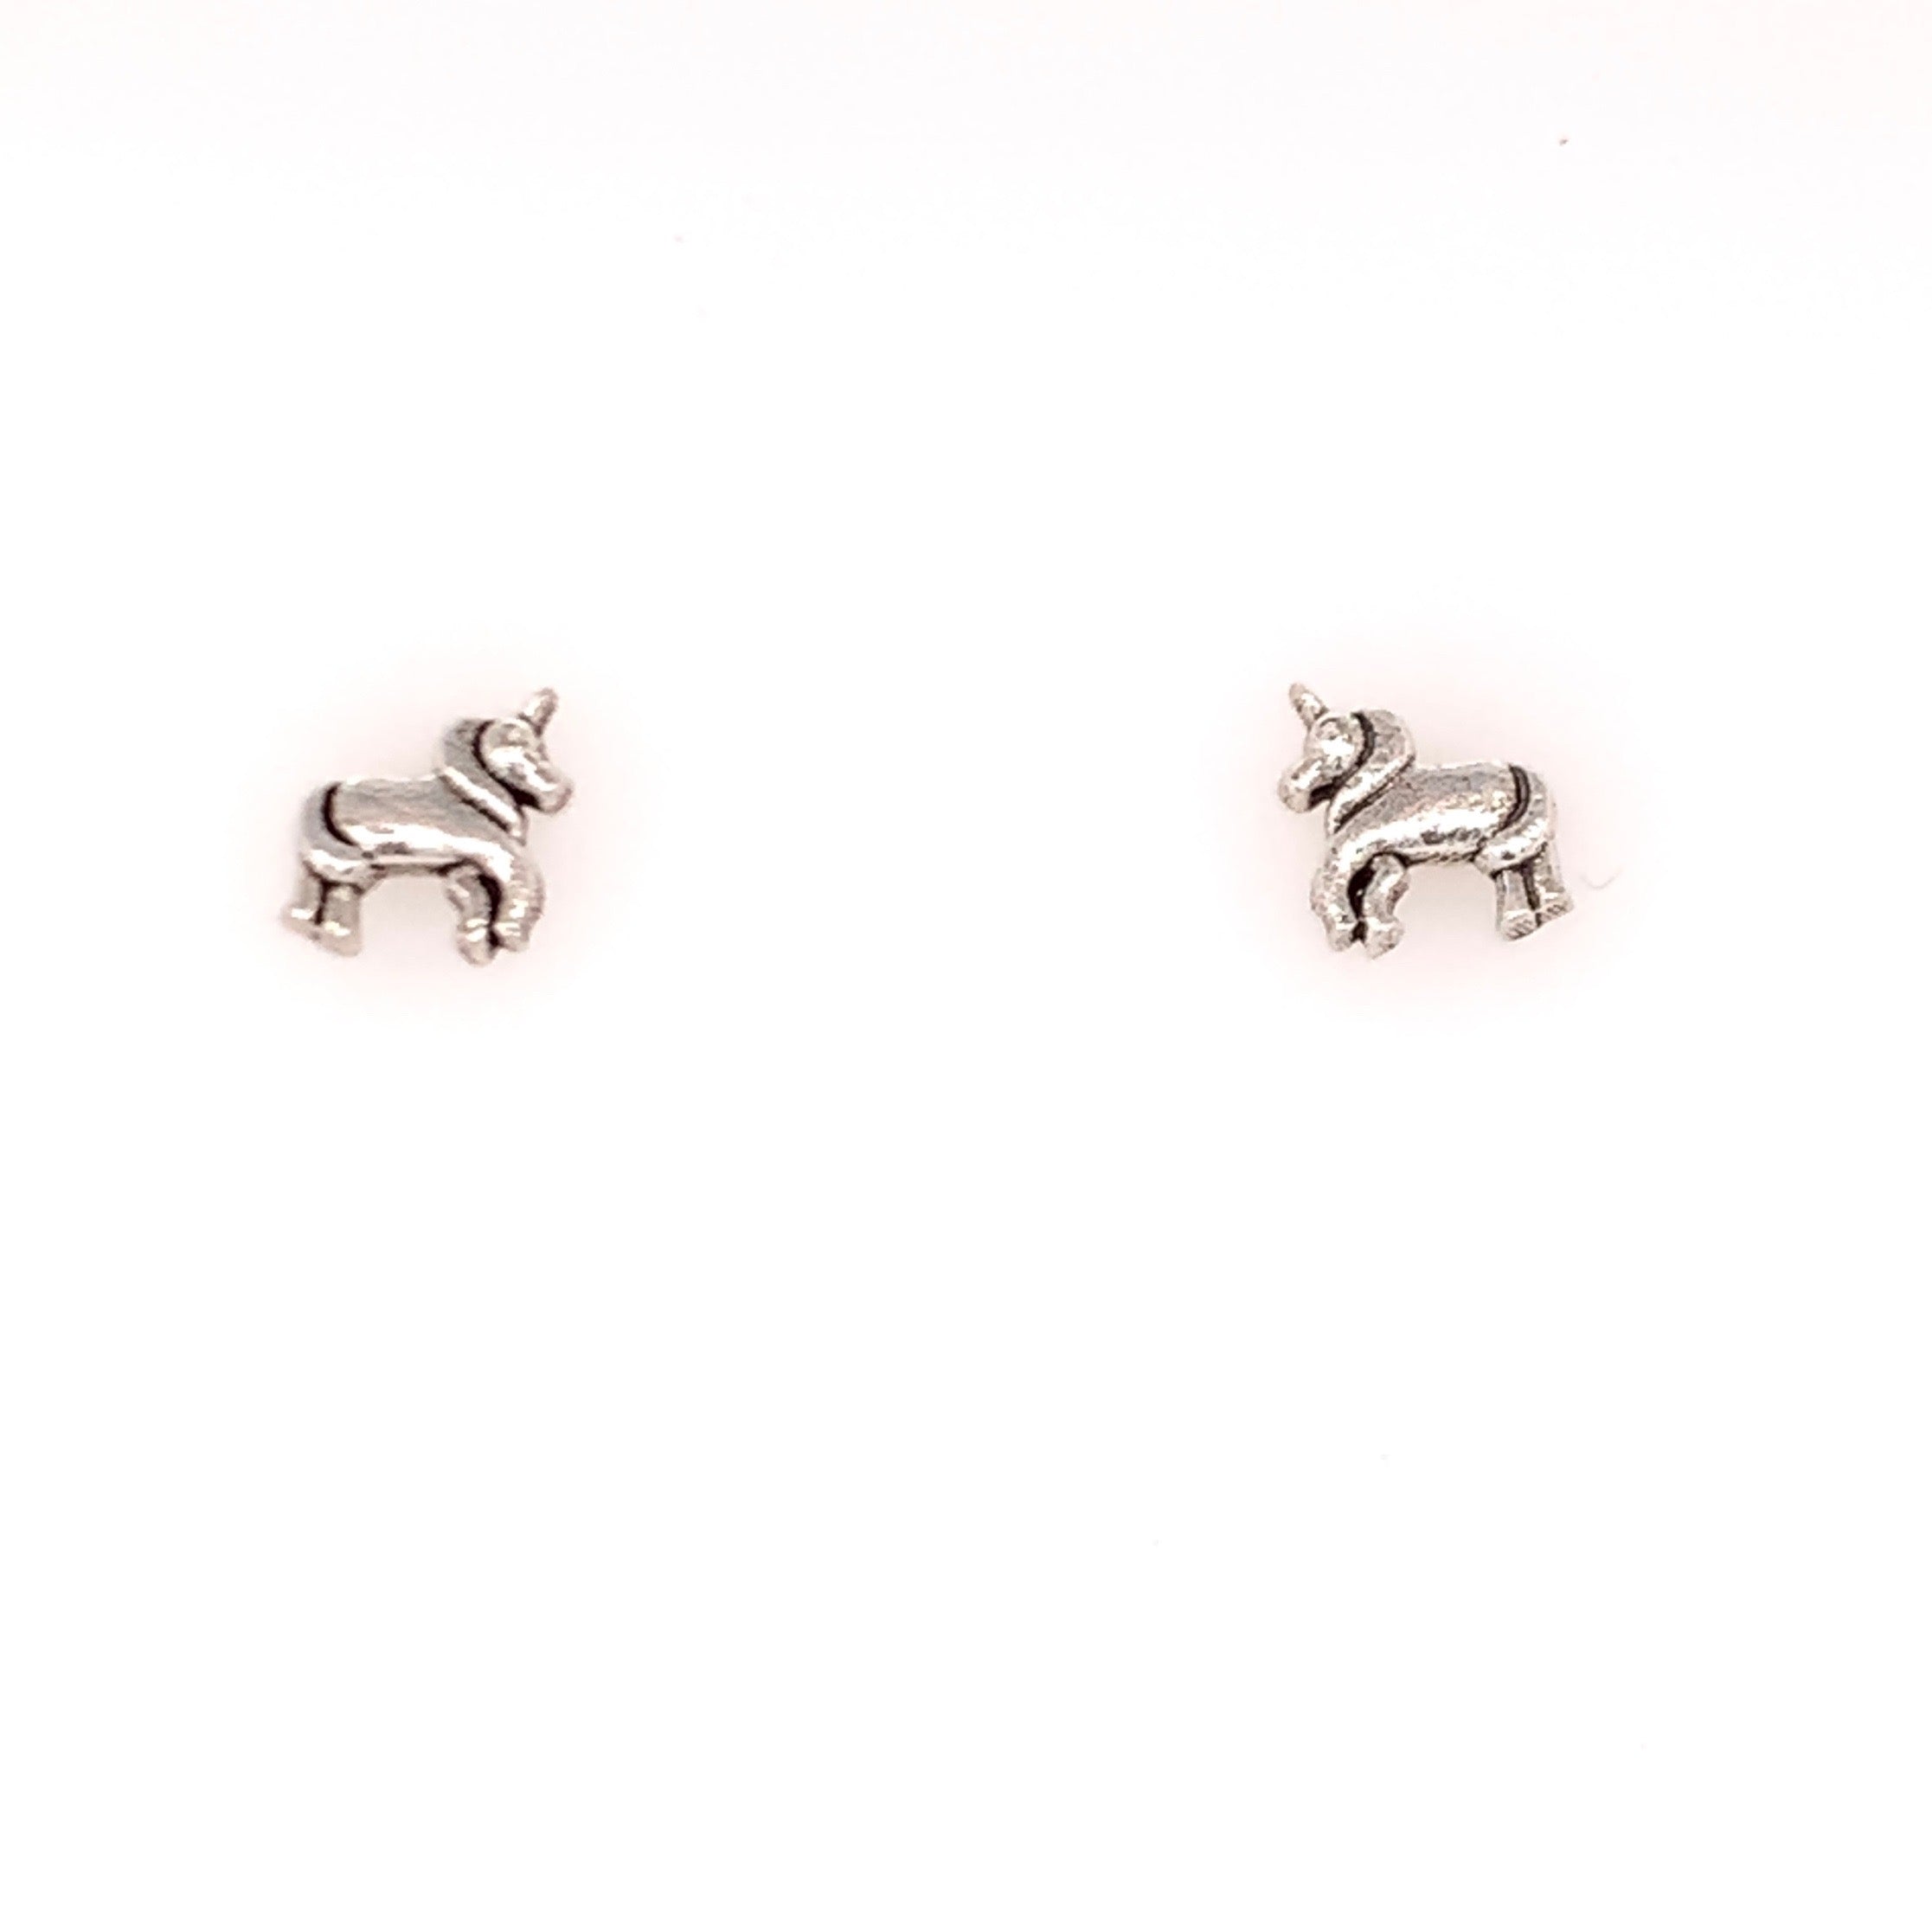 Tiny sterling silver unicorn earrings